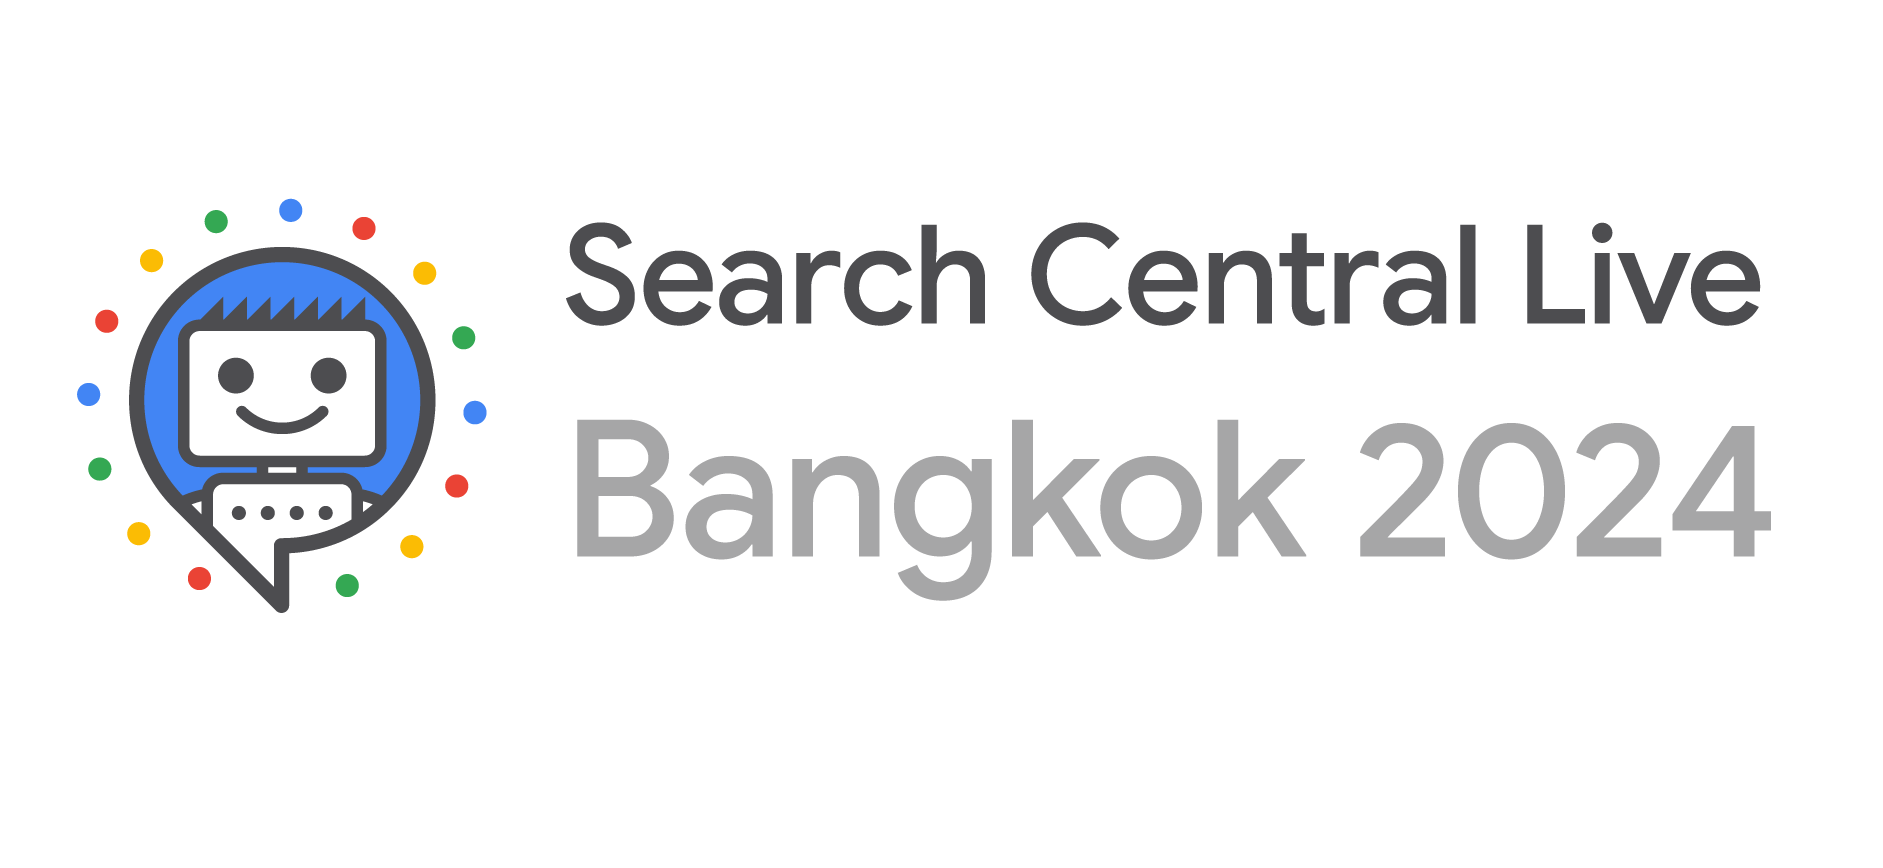 Search Central Live bangkok 2024